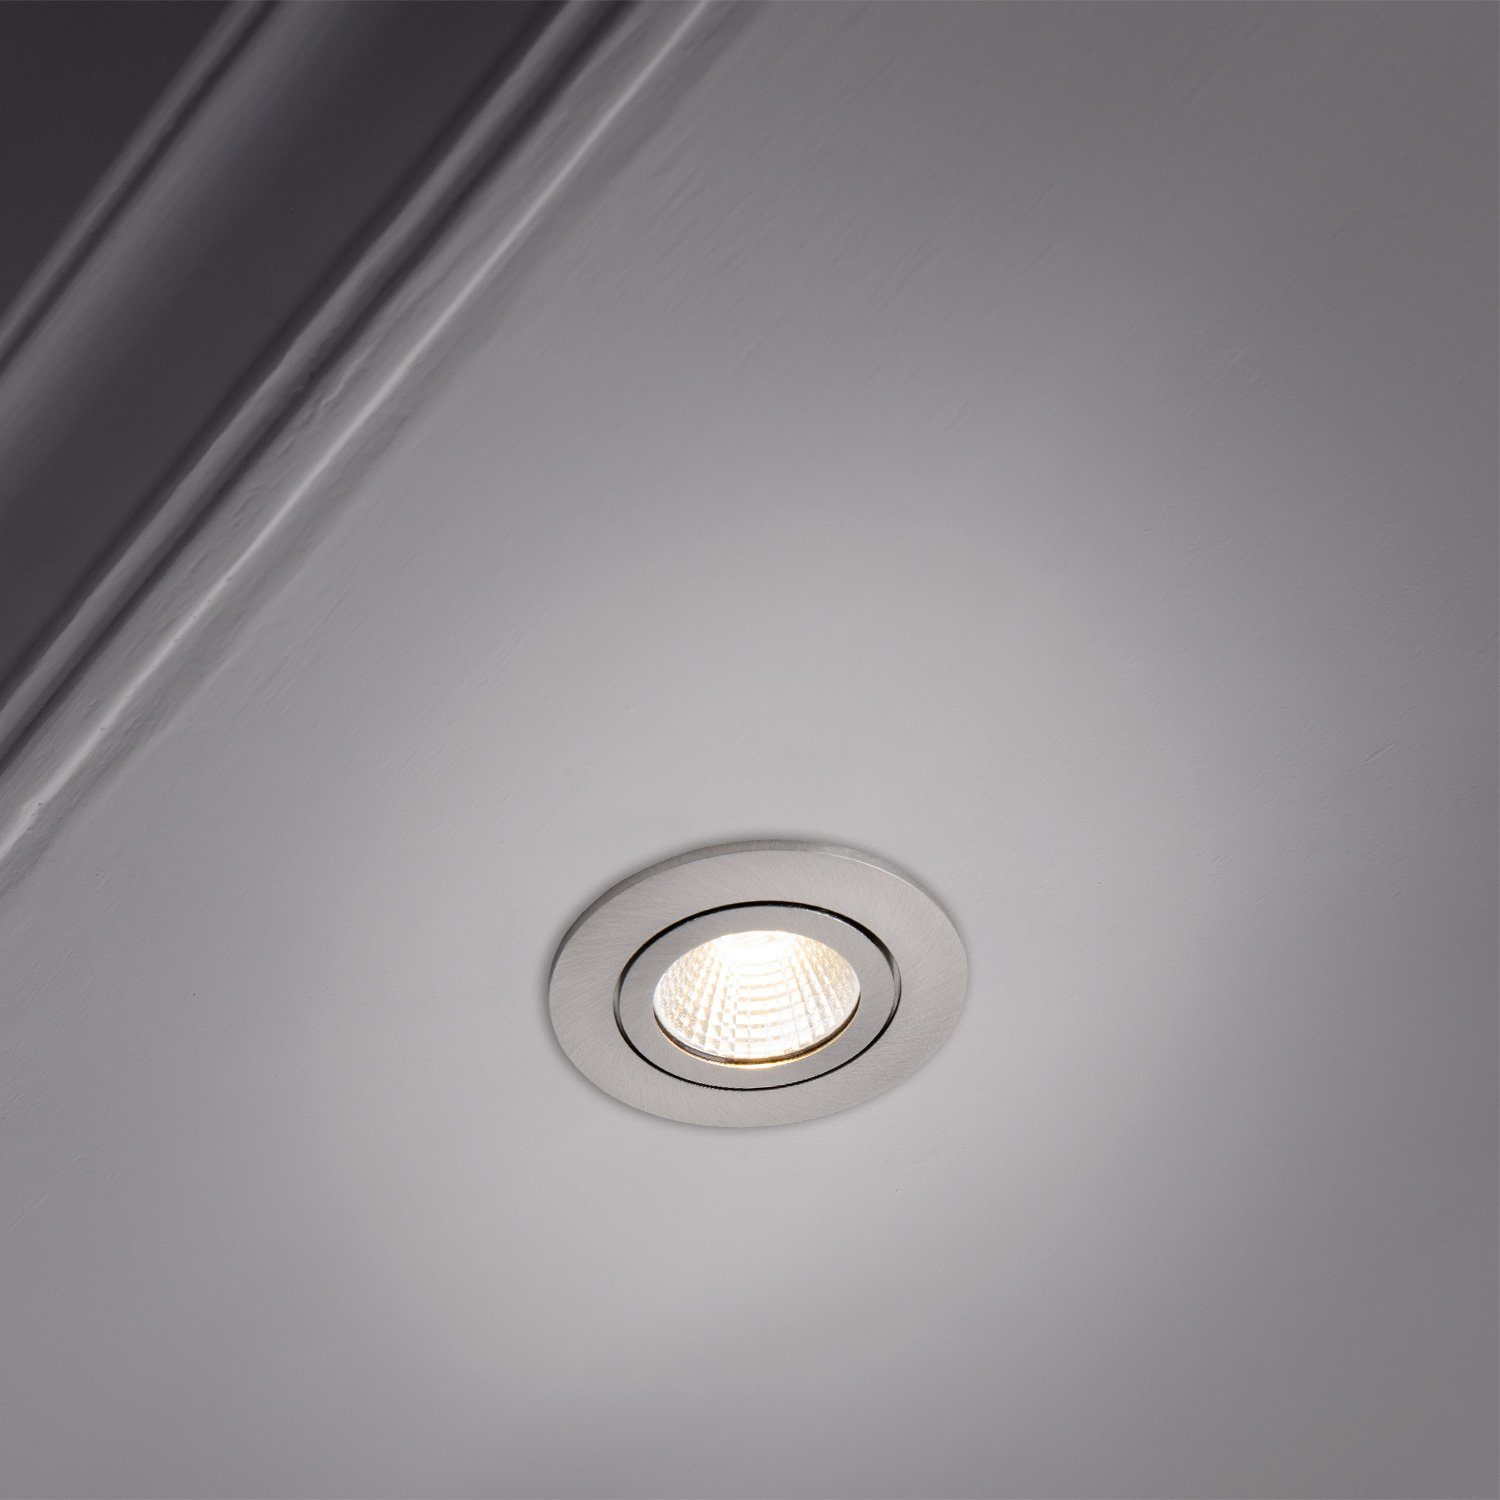 Paco Home Einbauleuchte Rita, dimmbar Spotlight Strahler LED LED Schwenkbar Warmweiß, wechselbar, Einbaustrahler LED Flach